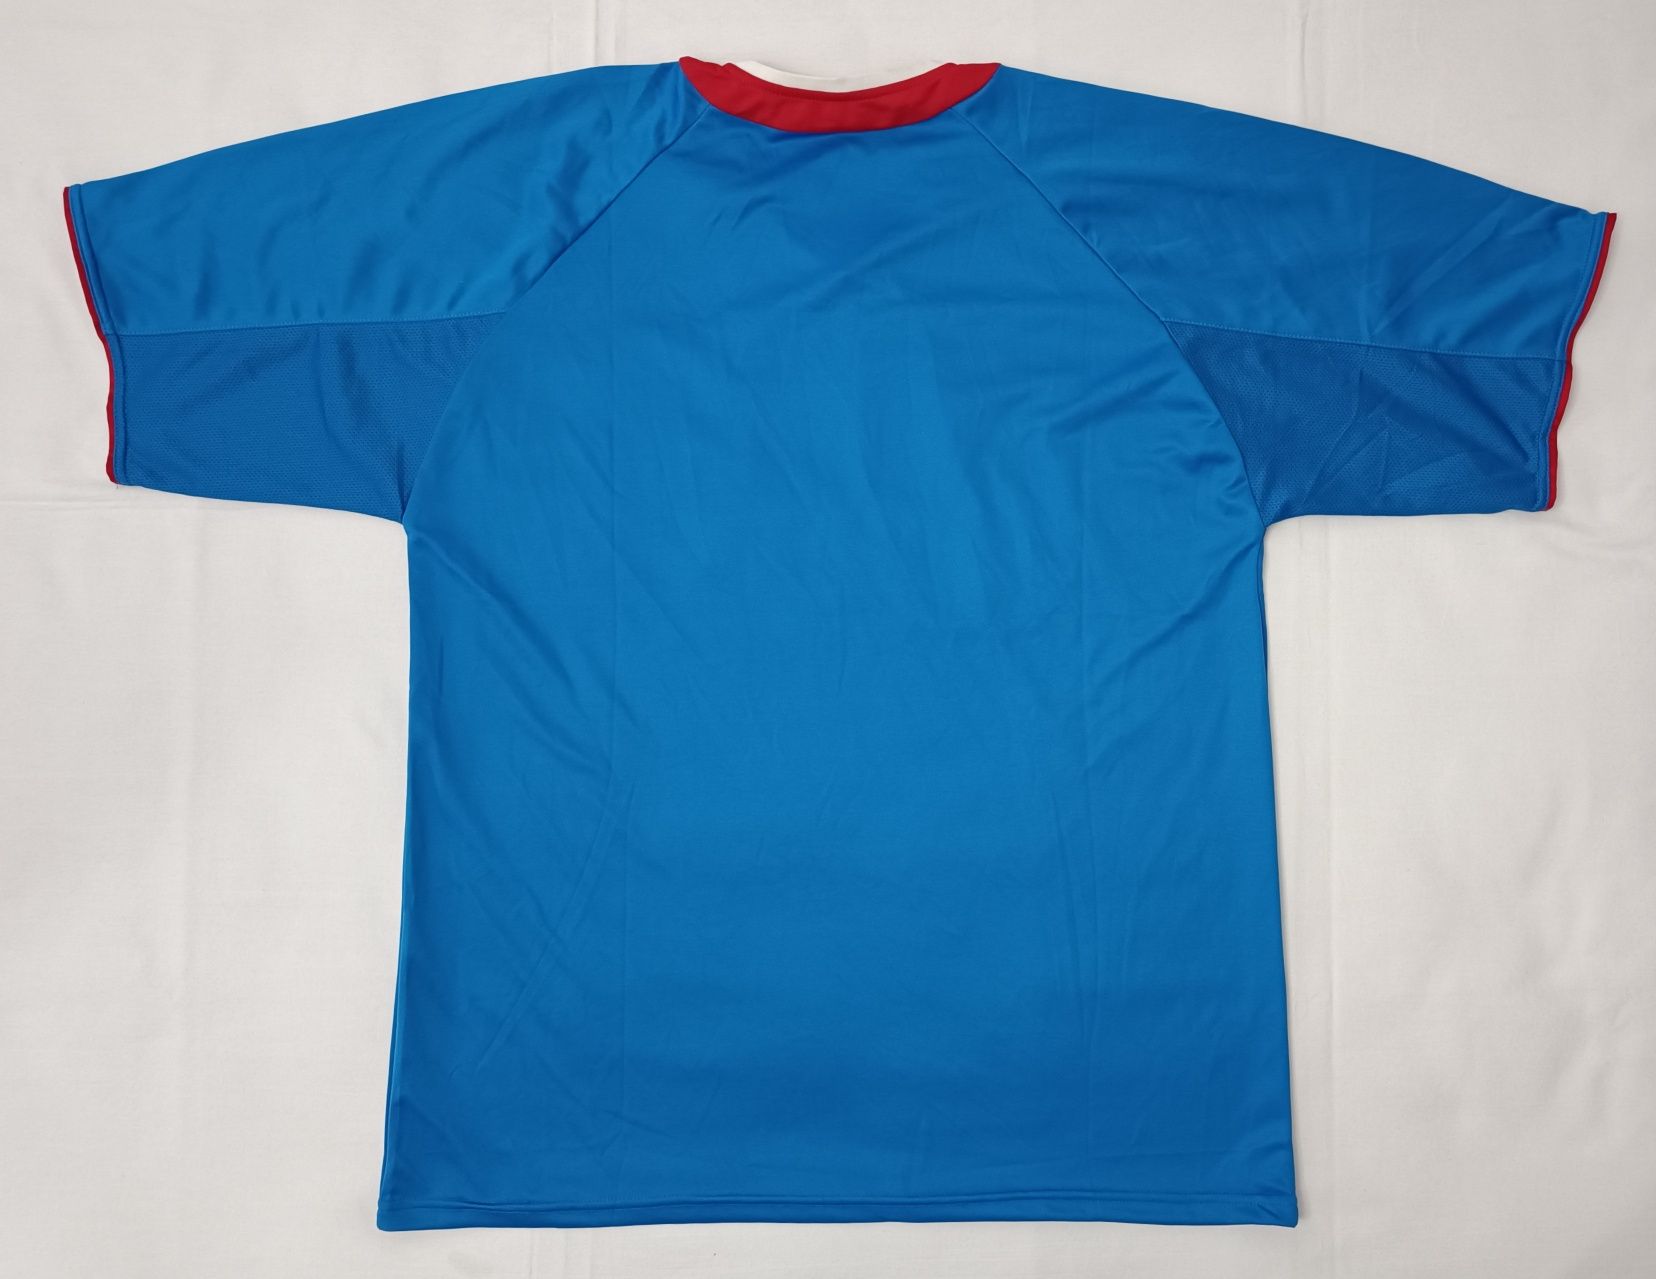 Diadora Glasgow Rangers Home Jersey оригинална тениска XL Рейнджърс